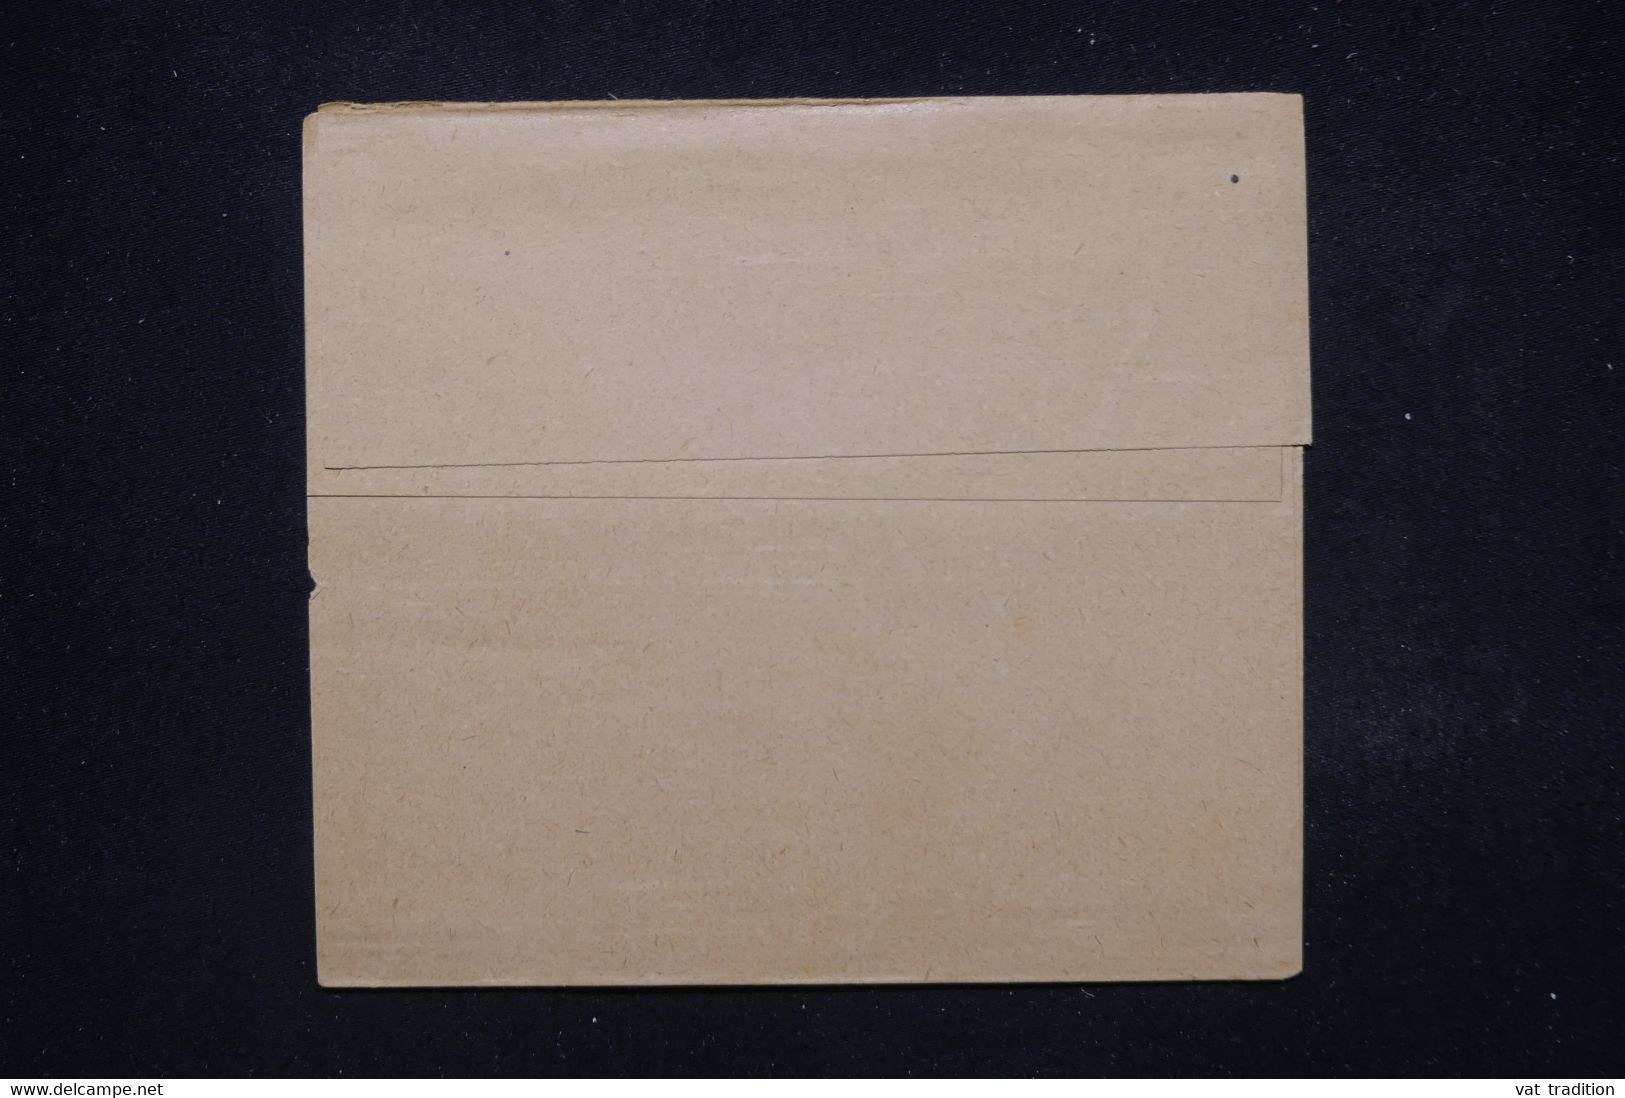 AUSTRALIE - Entier Postal Type Victoria Du South Australia, Non Circulé - L 81159 - Postal Stationery